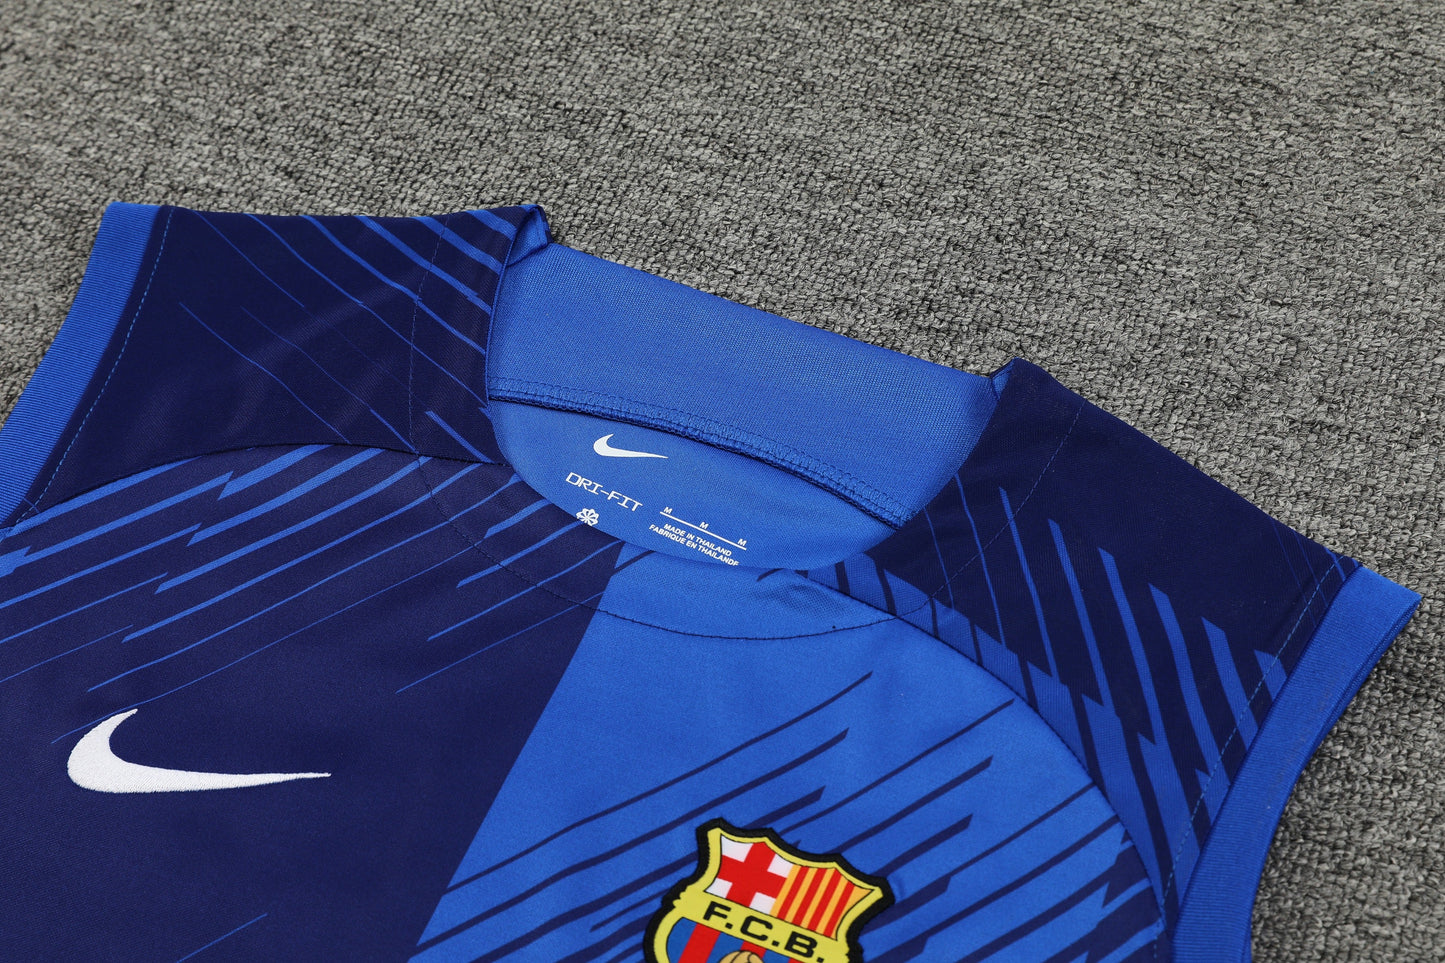 Kit Camisa Regata e Short Barcelona 23/24